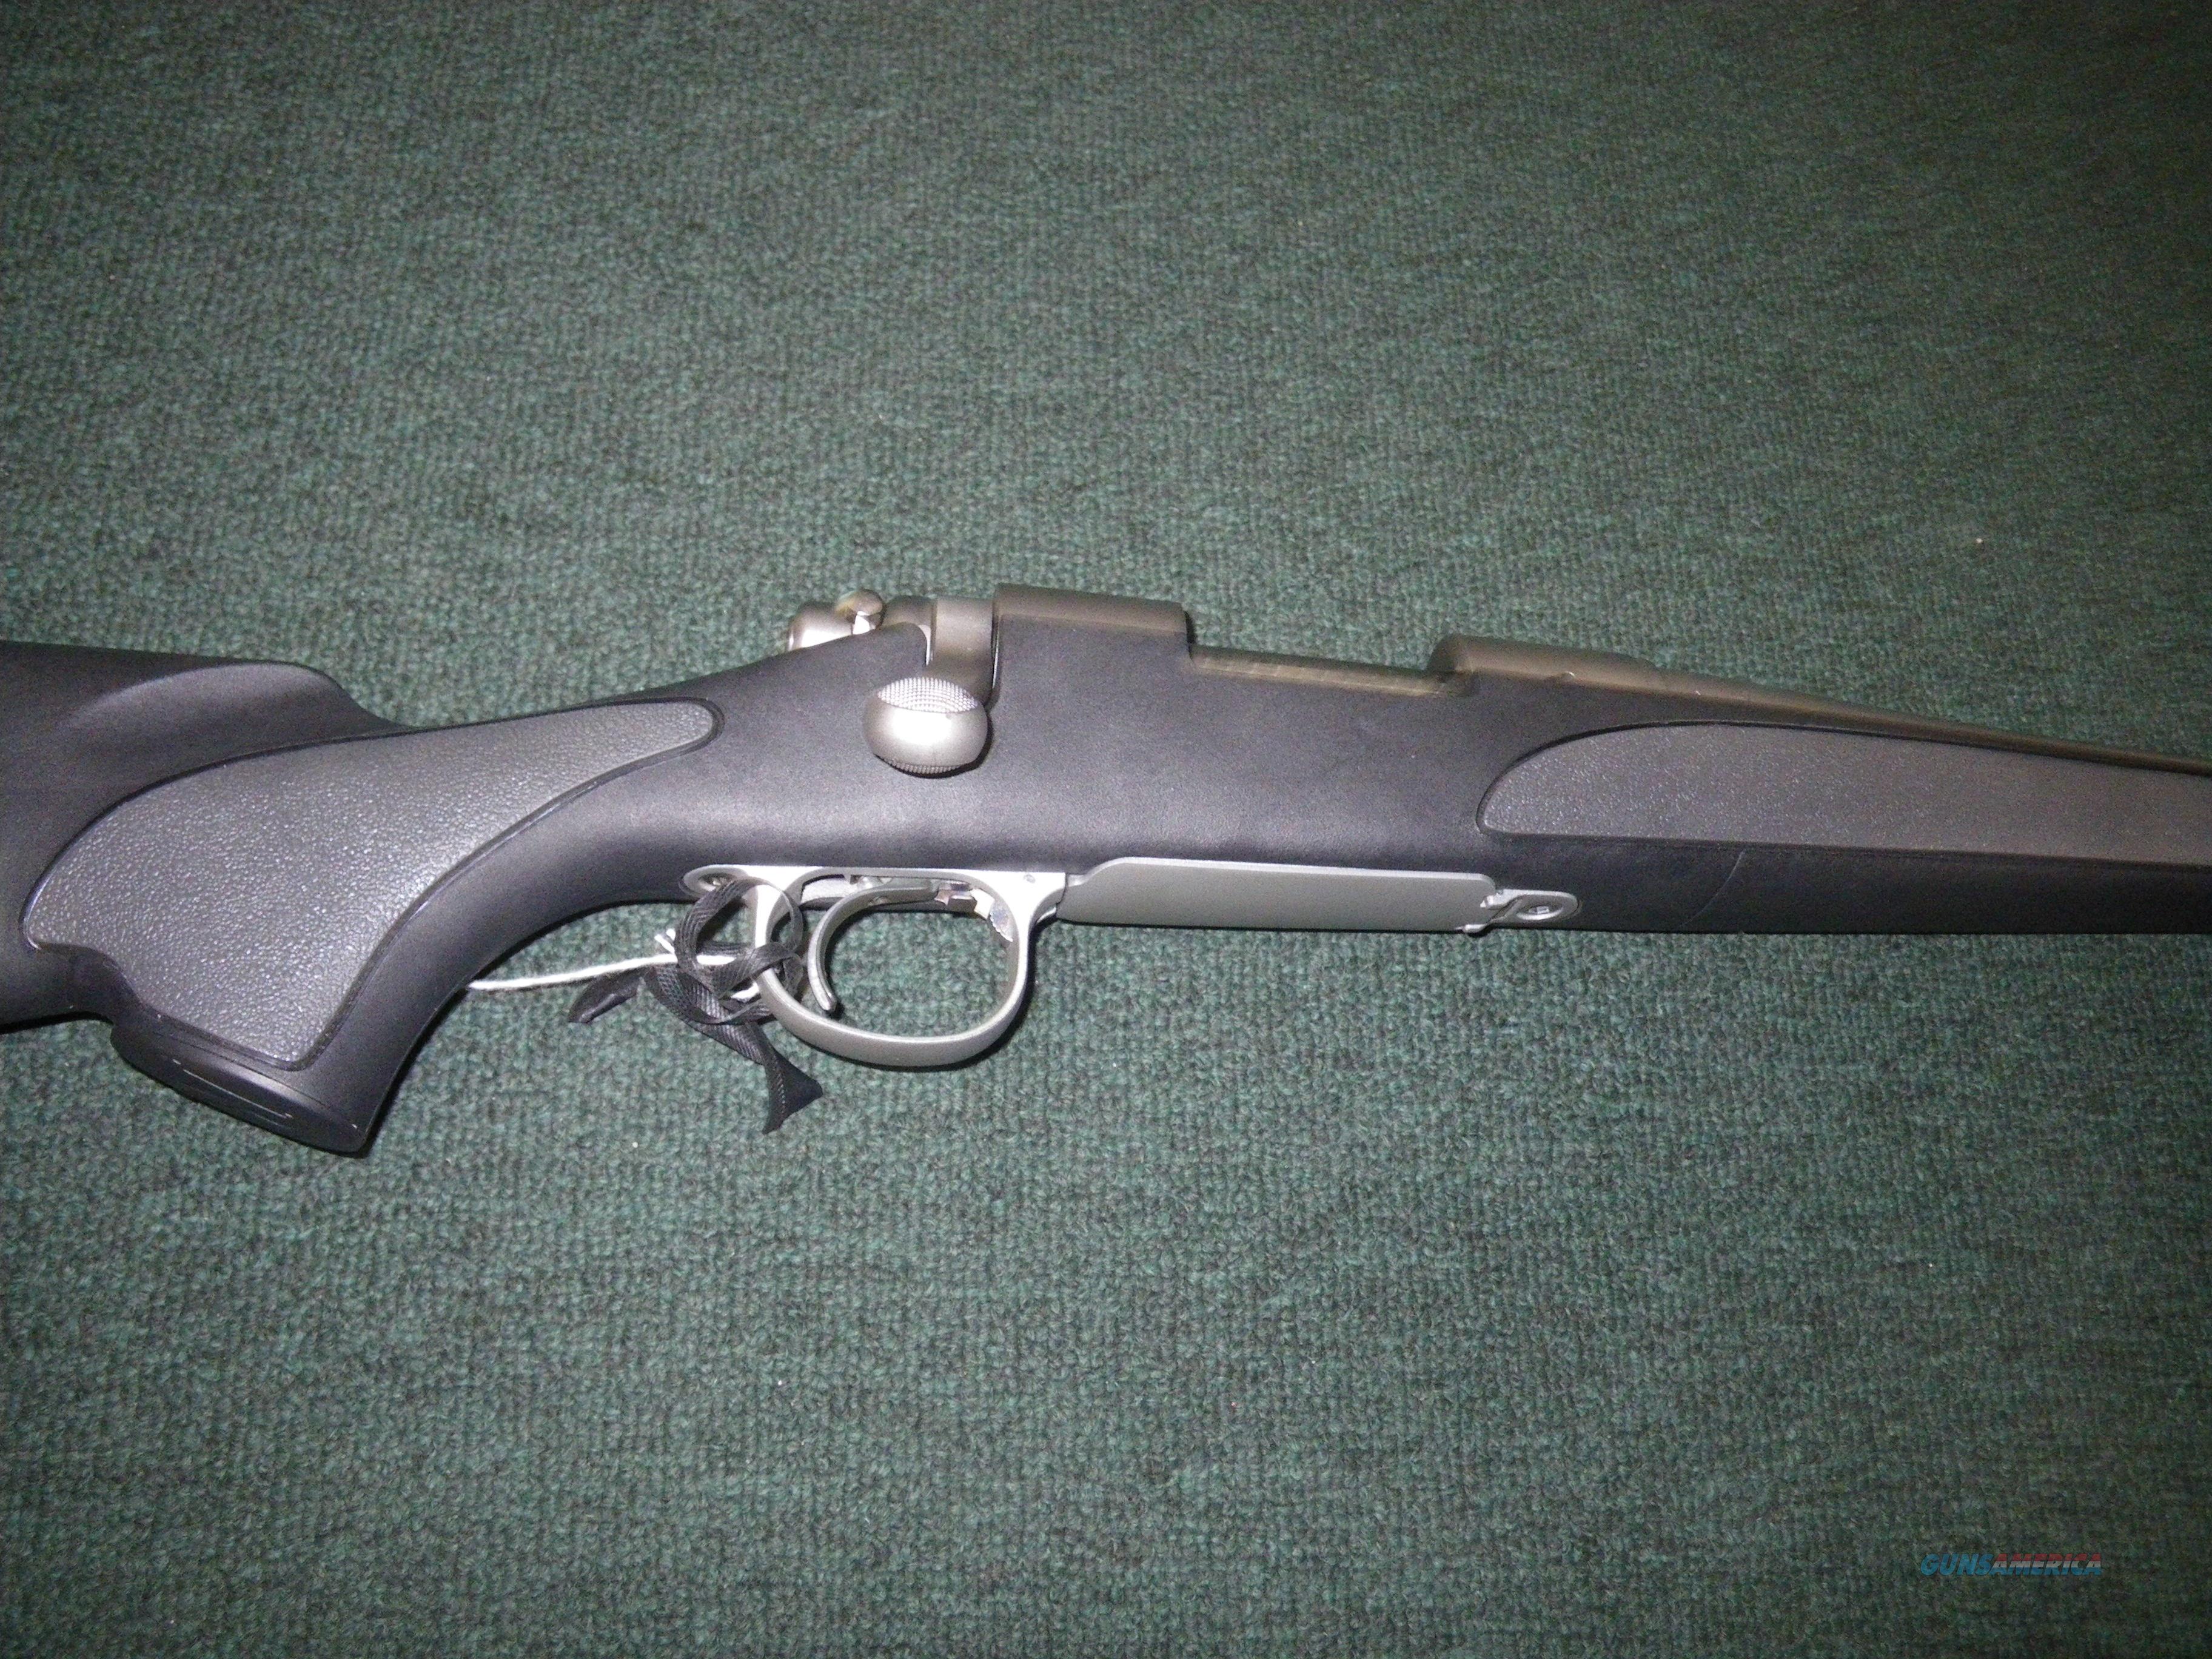 Remington Model 700 SPS Stainless 3... for sale at Gunsamerica.com ...